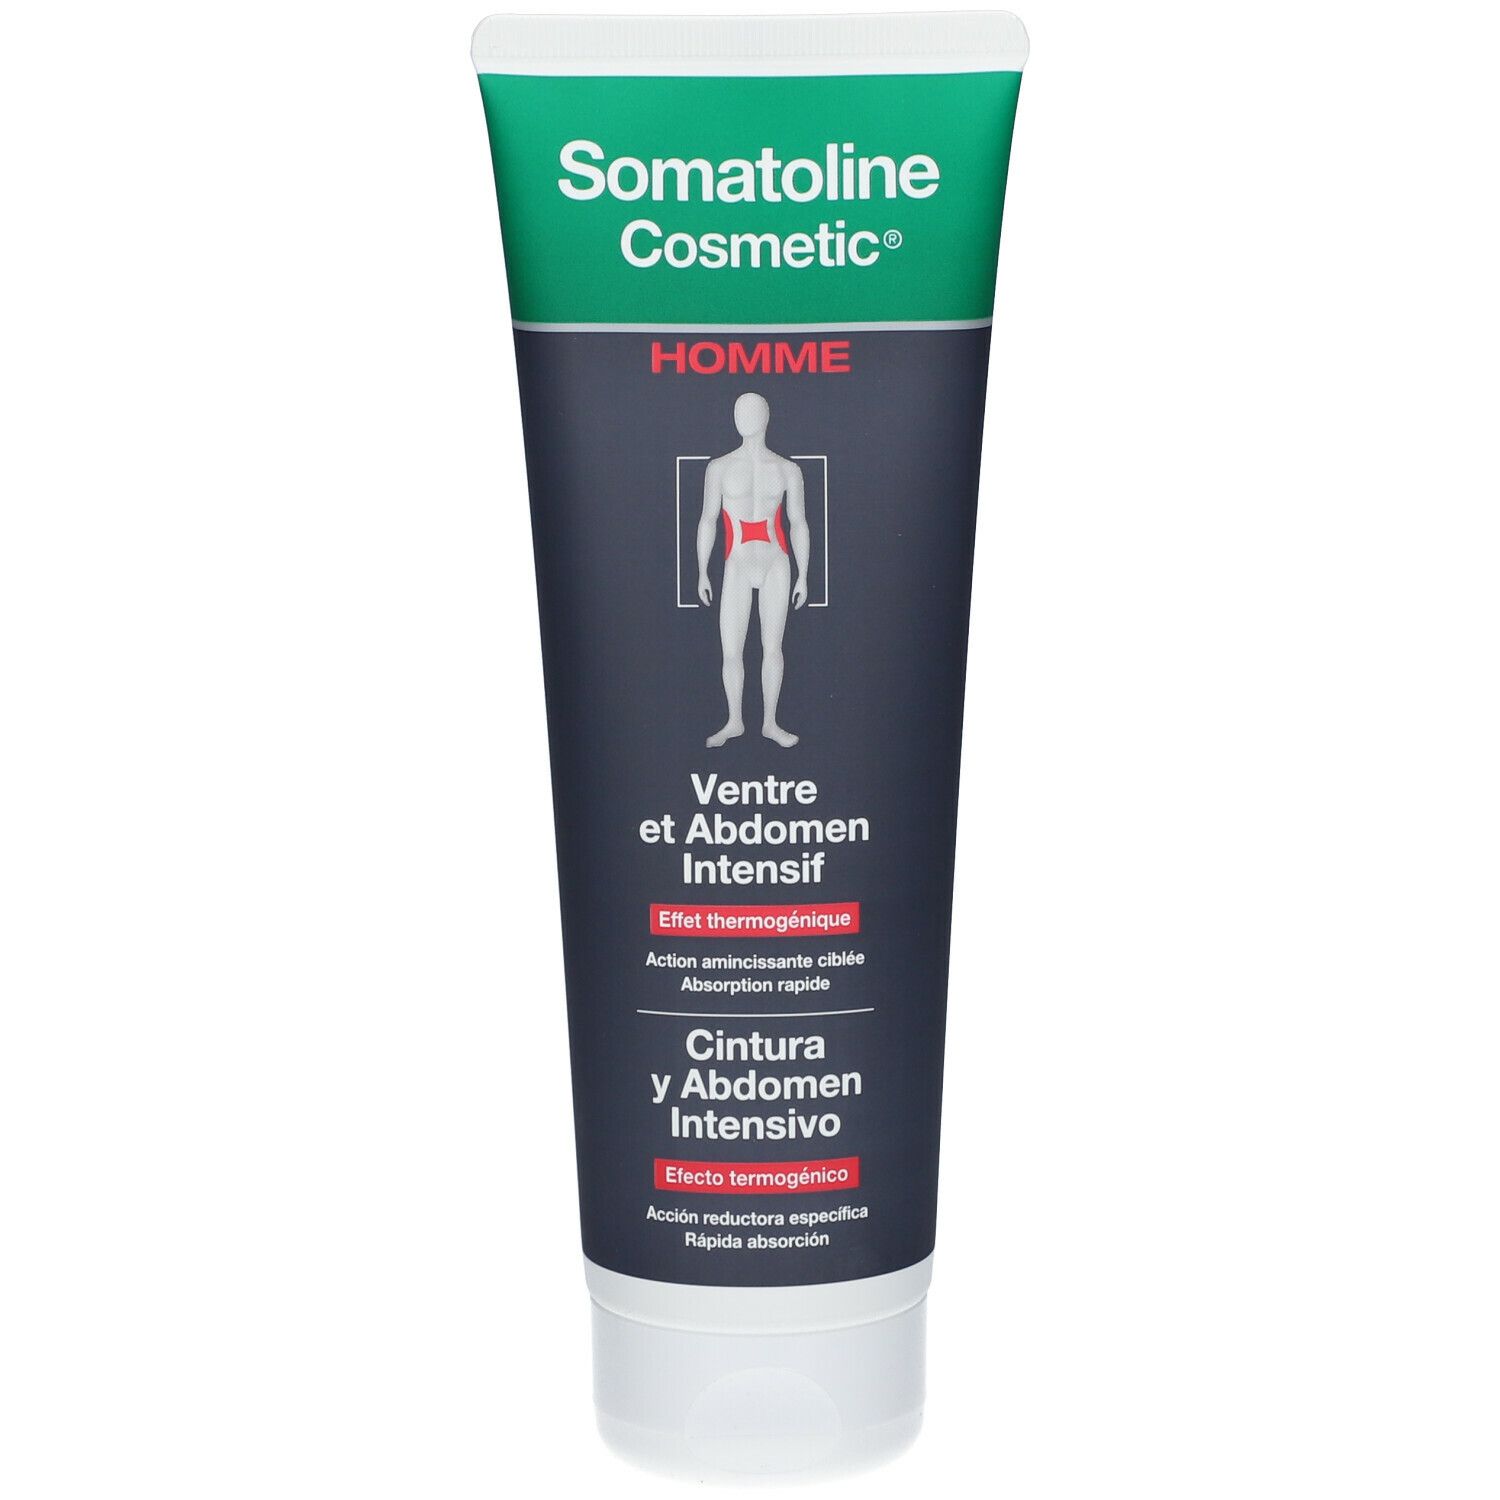 Somatoline Cosmetic® Homme Ventre et Abdomen Intensif